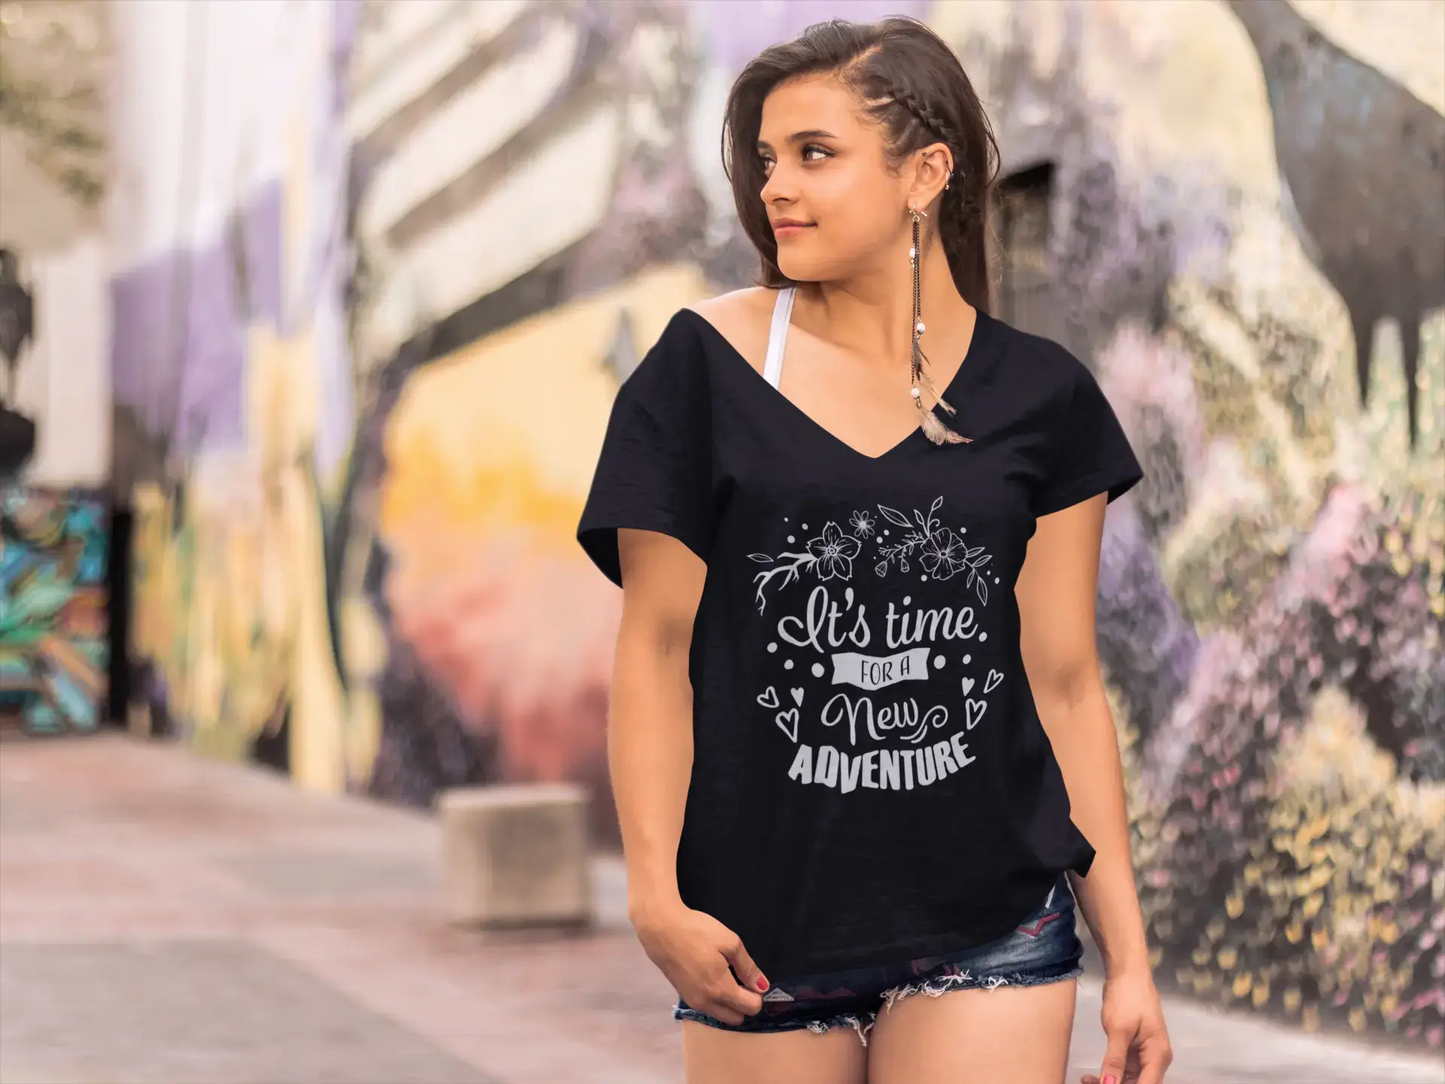 ULTRABASIC Women's T-Shirt It's Time for a New Adventure - Short Sleeve Tee Shirt Tops